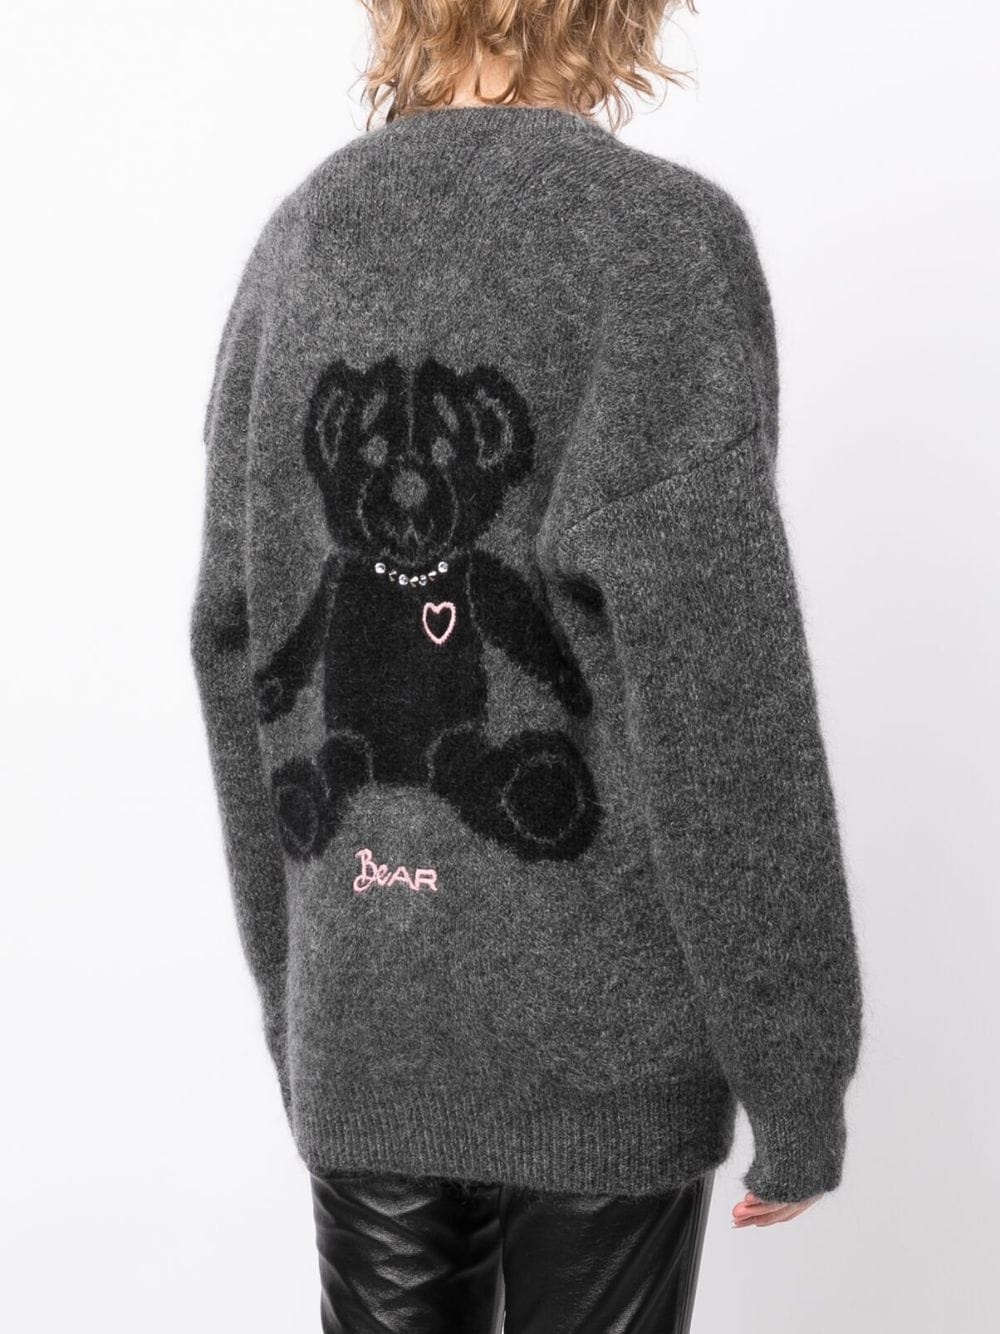 bear-intarsia knitted cardigan - 4